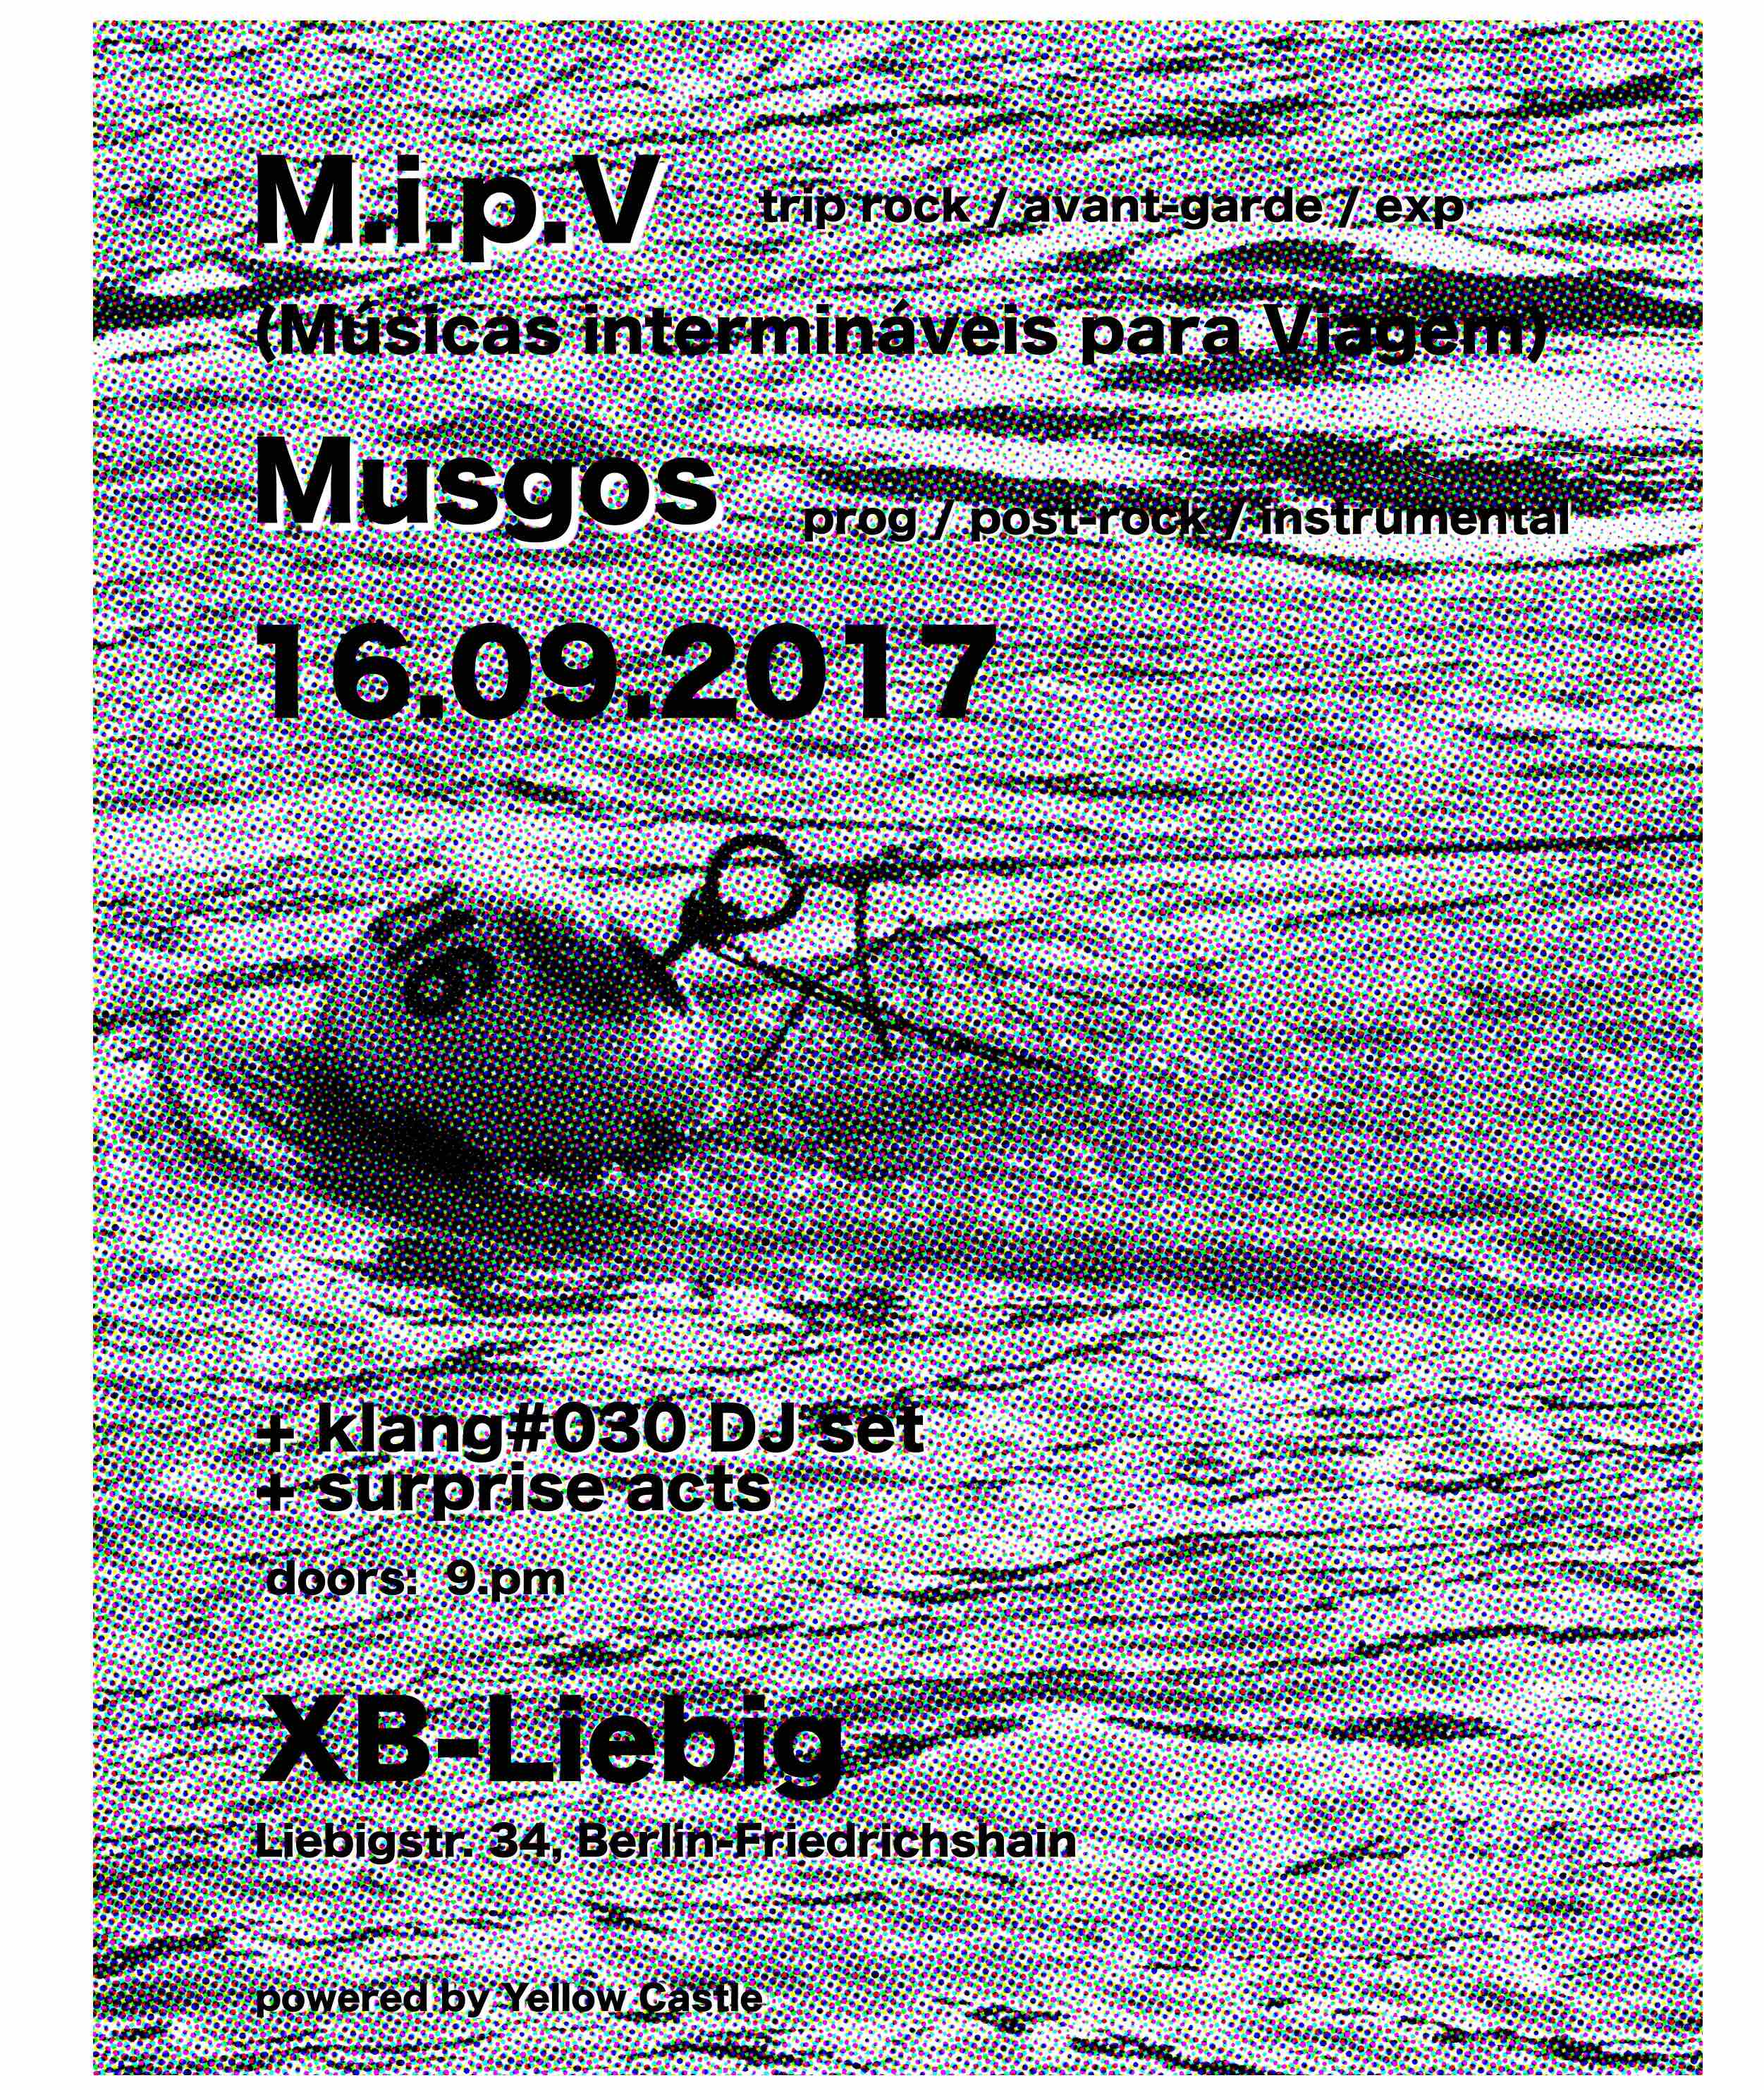 xb liebig promo flyer 5c1 web